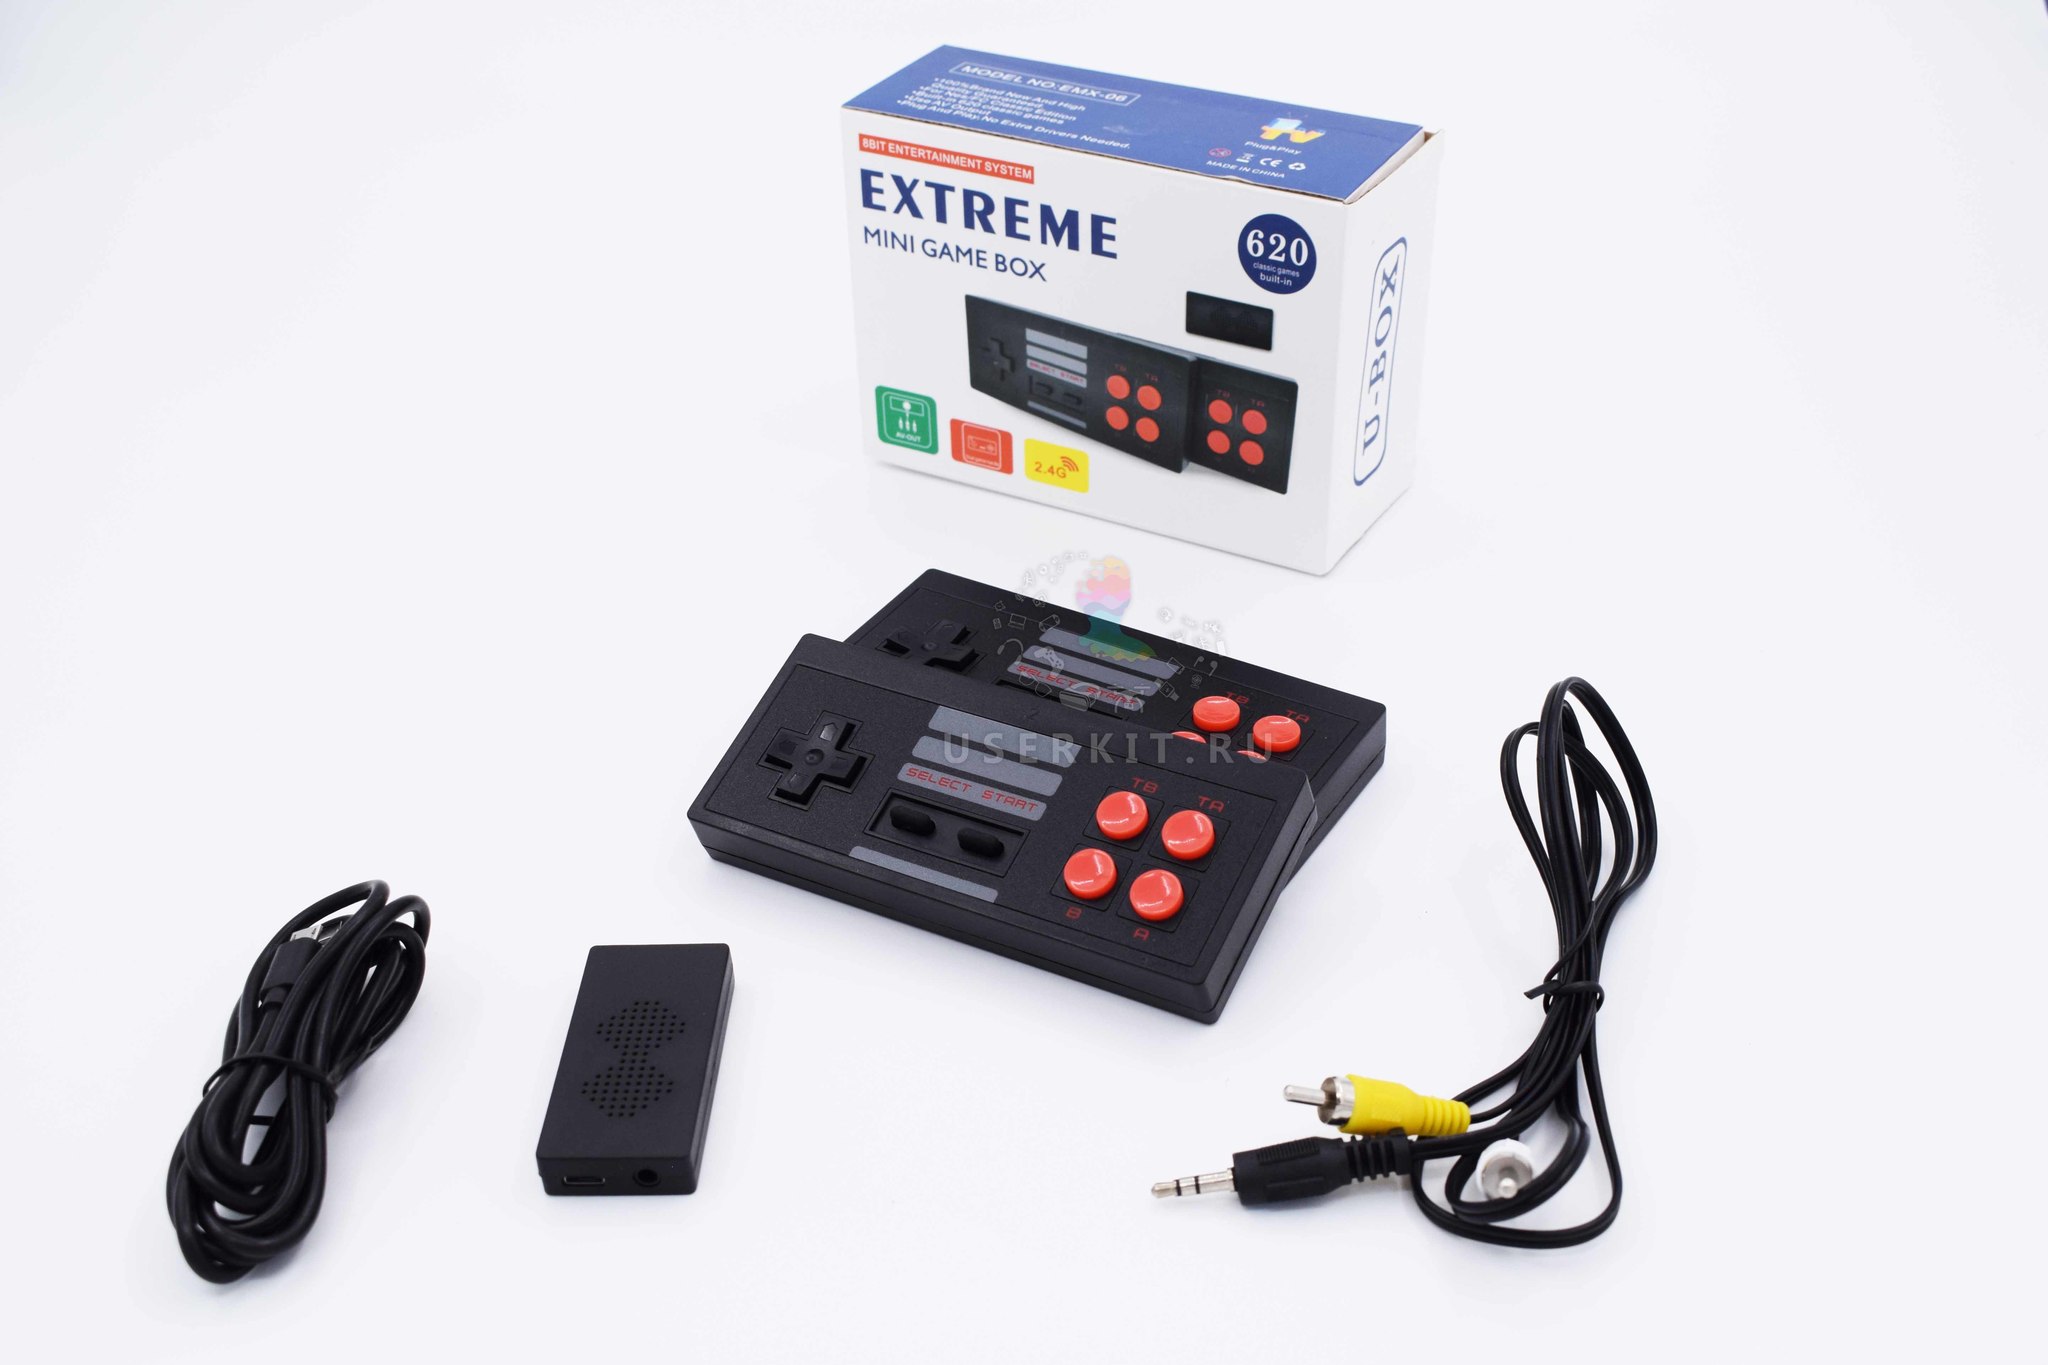 extreme mini game box 8 bit entertainment system